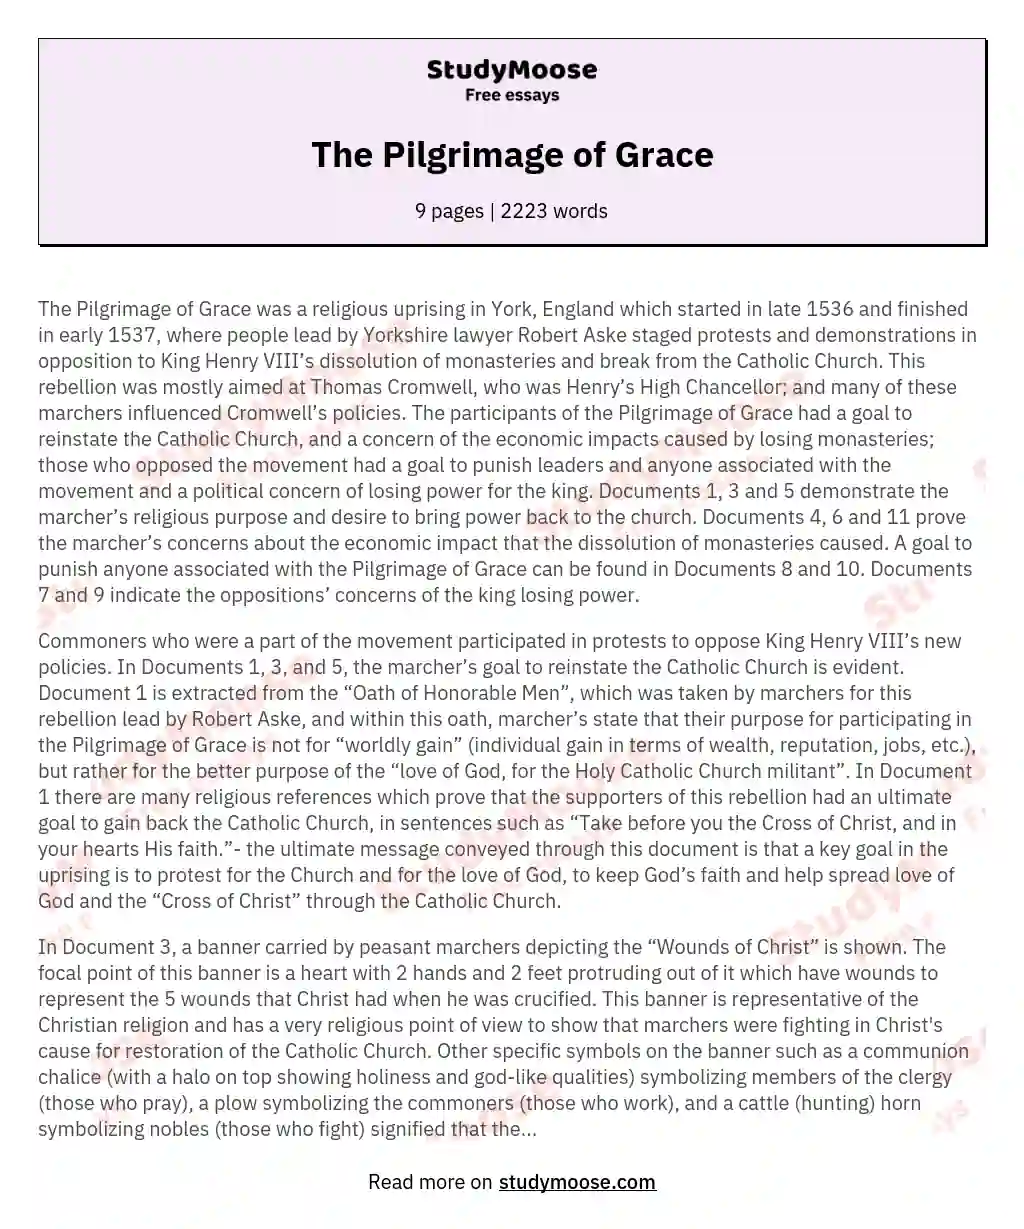 The Pilgrimage of Grace essay